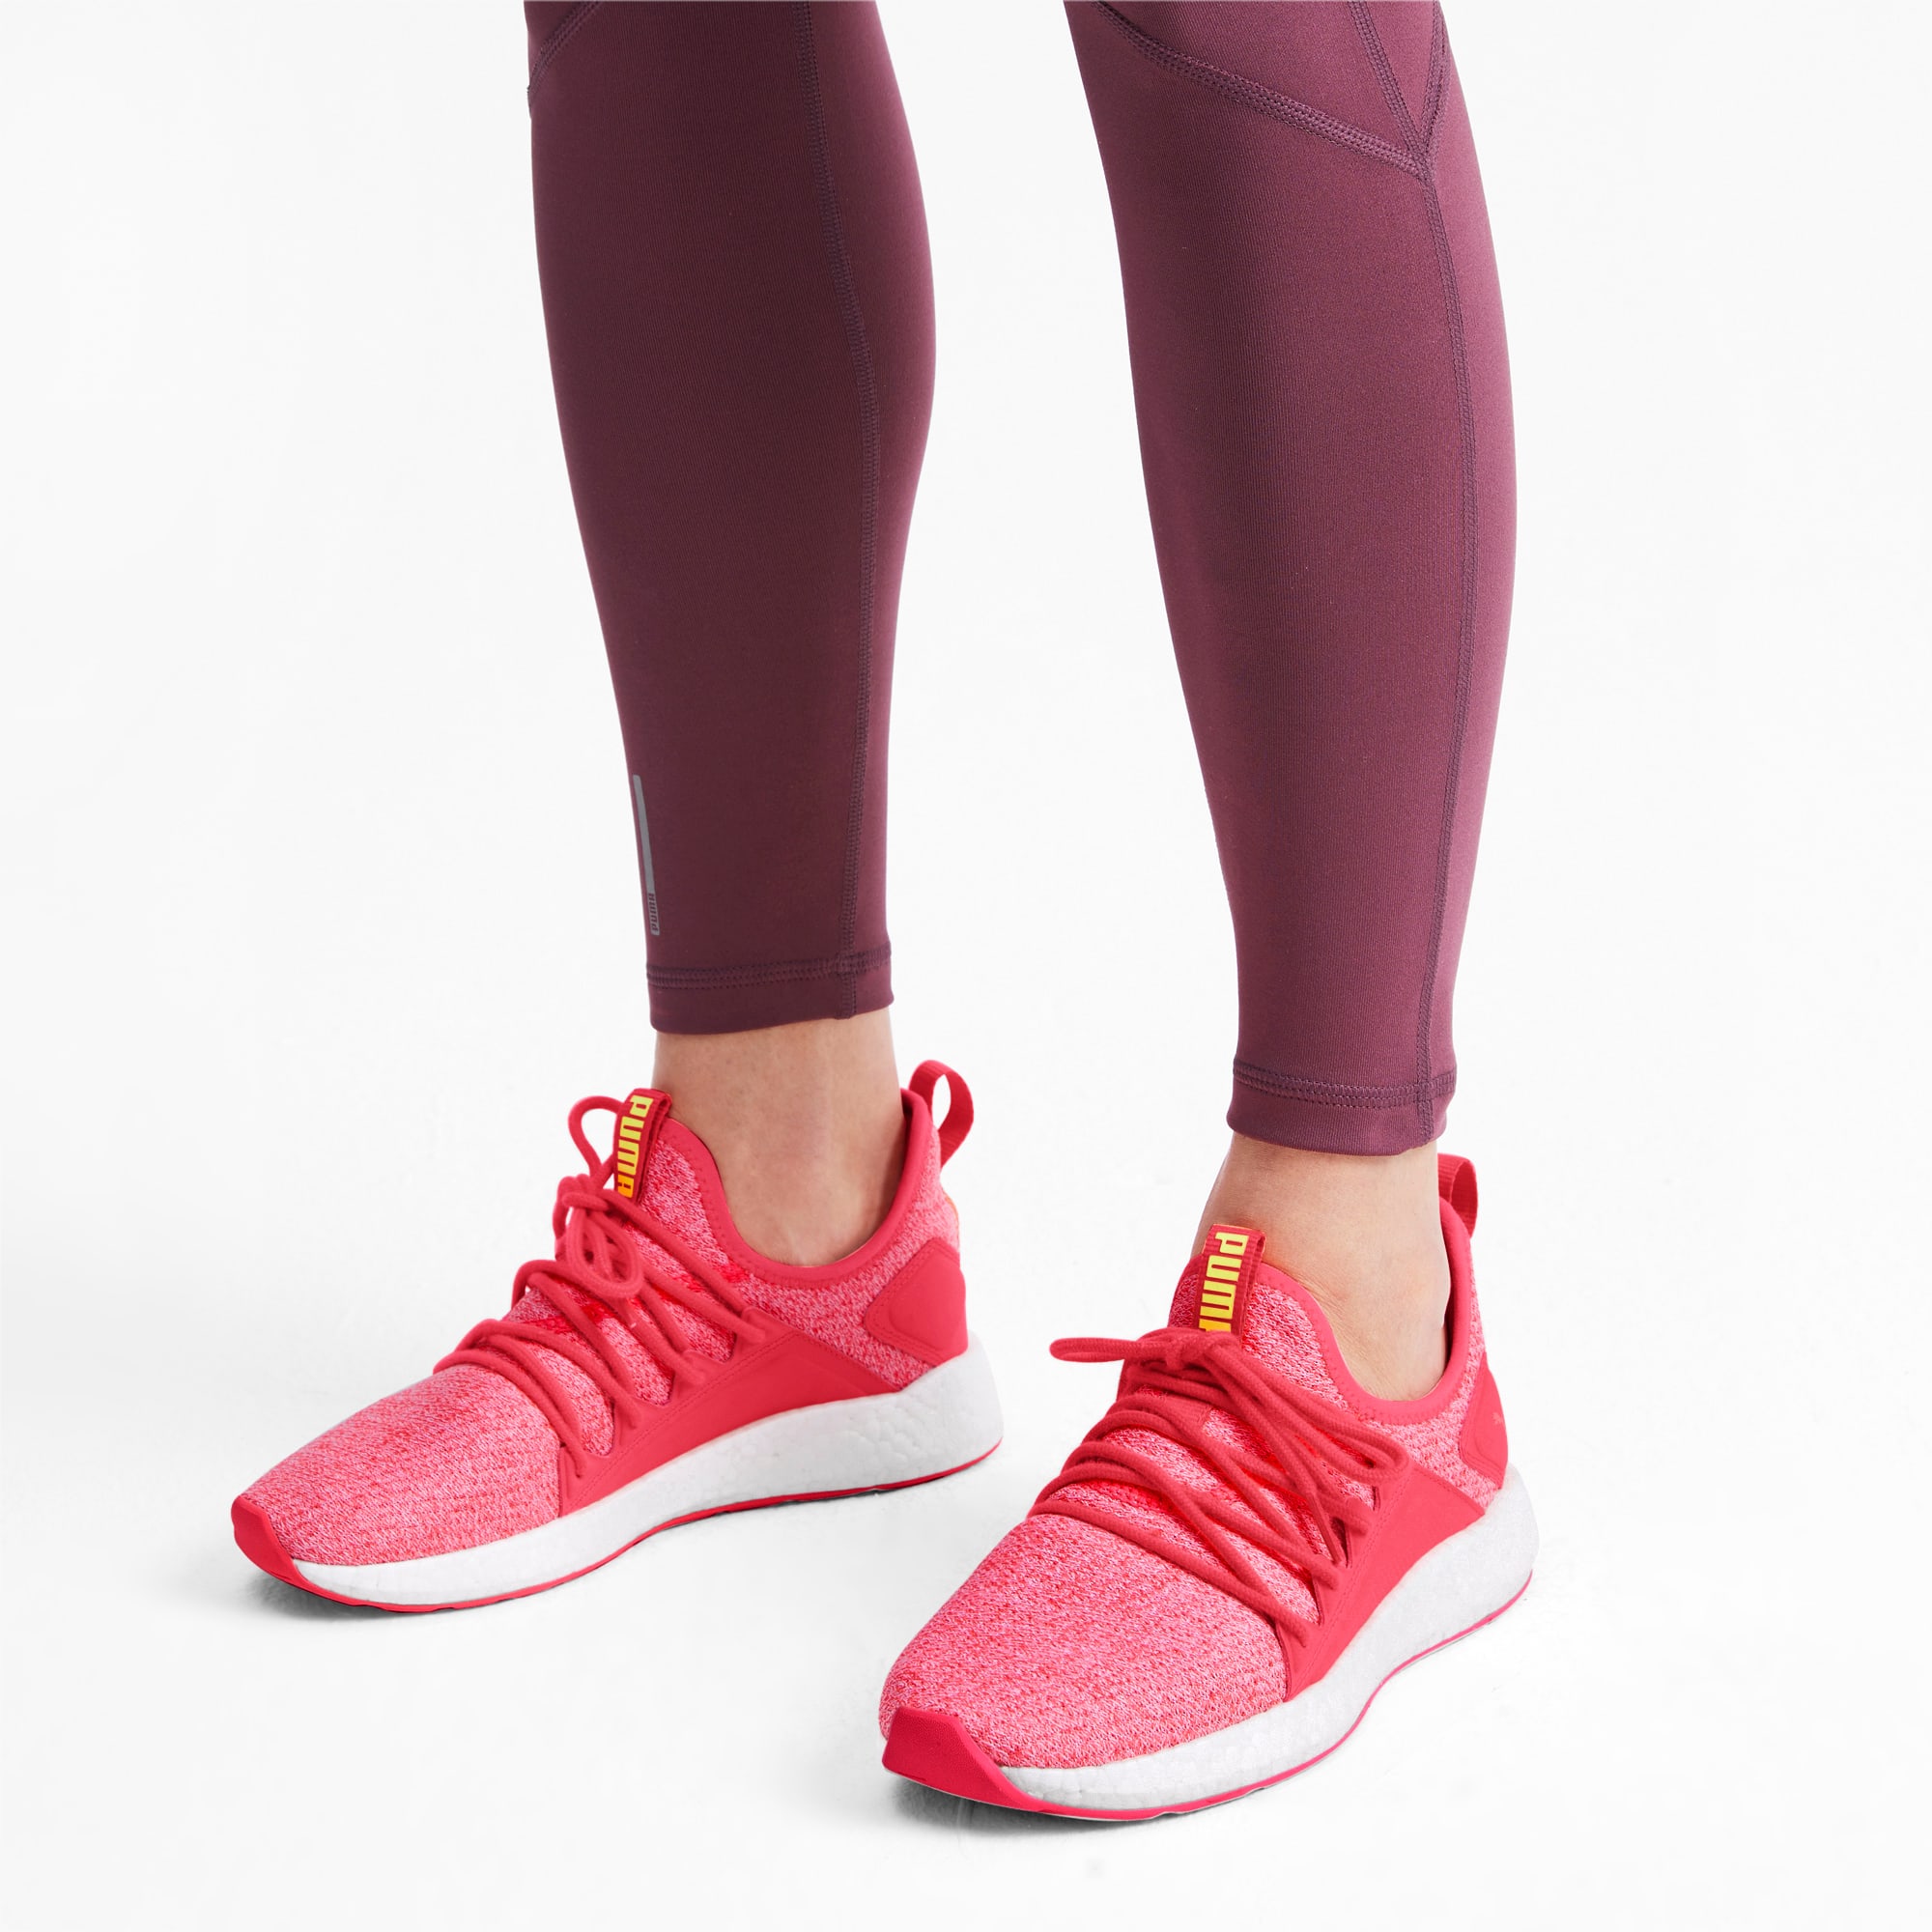 NRGY Neko Knit Women's Running Shoes 